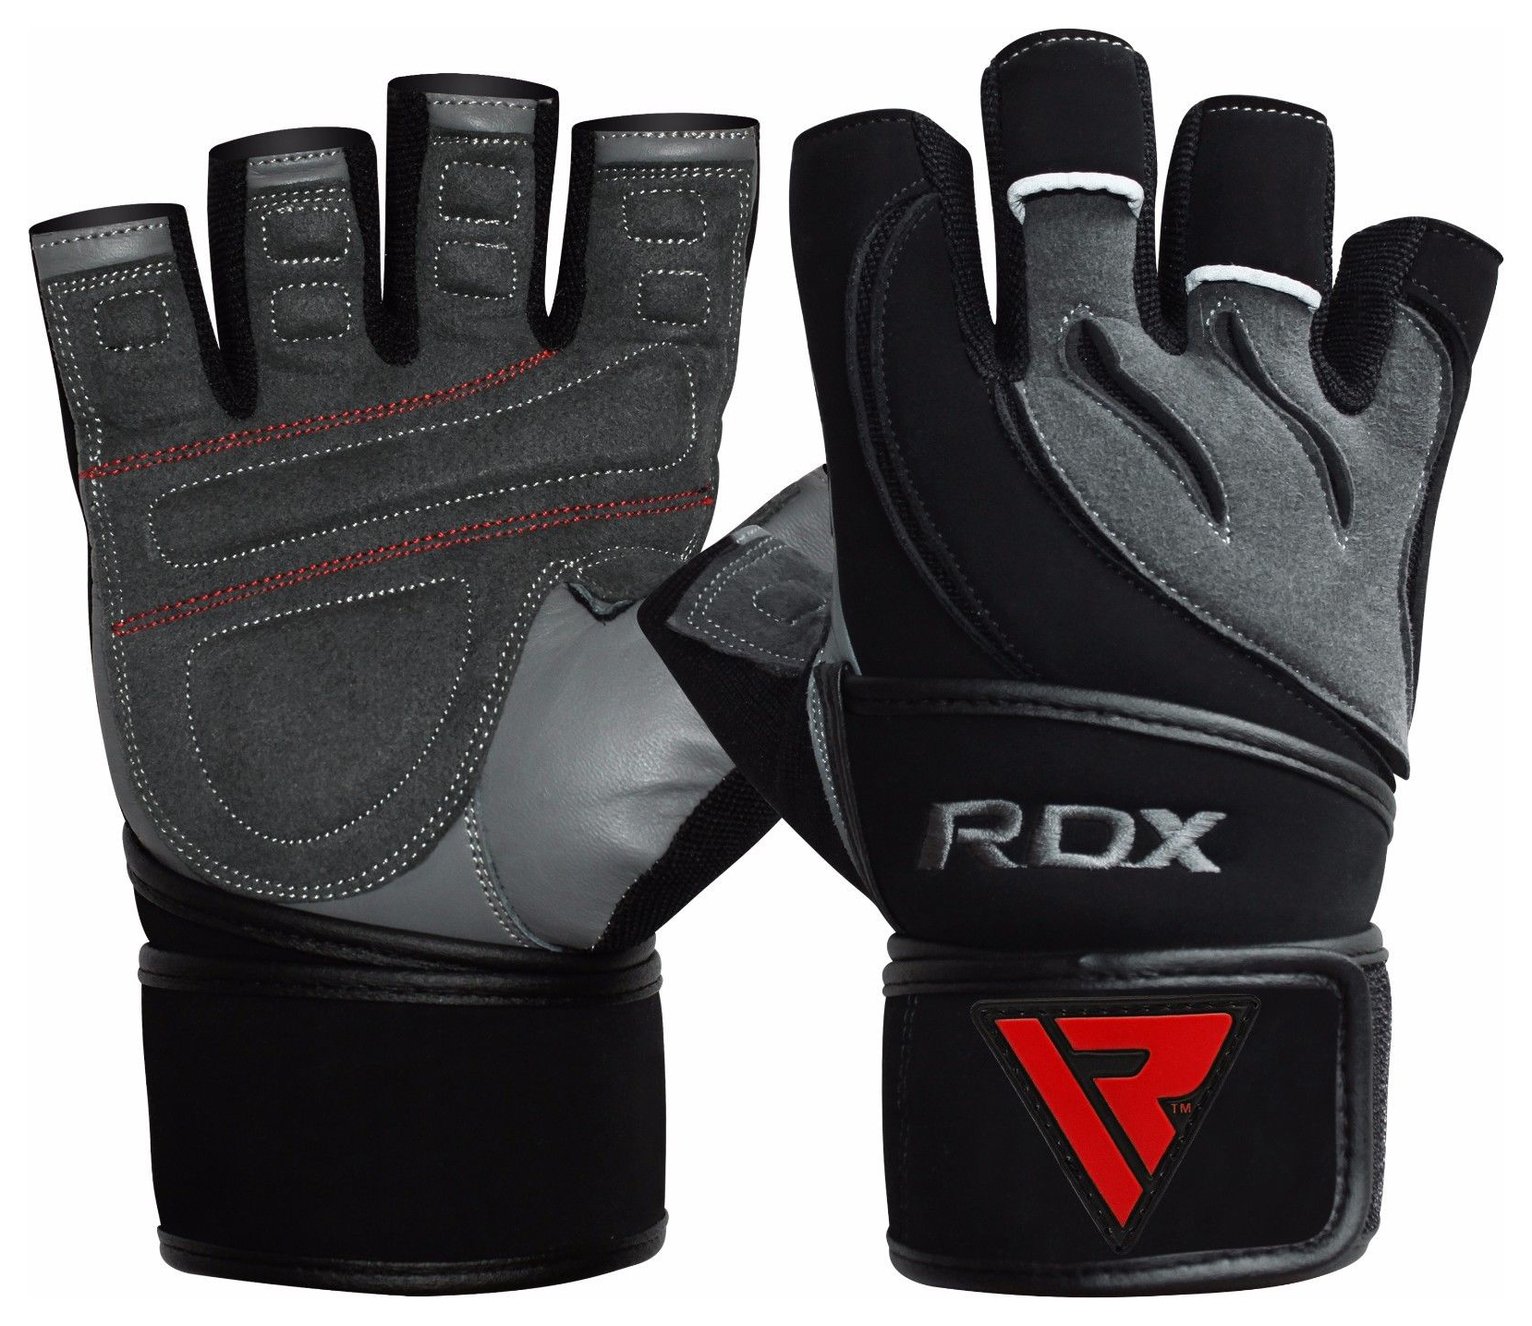 RDX Medium/Large Fitness Gloves - Grey